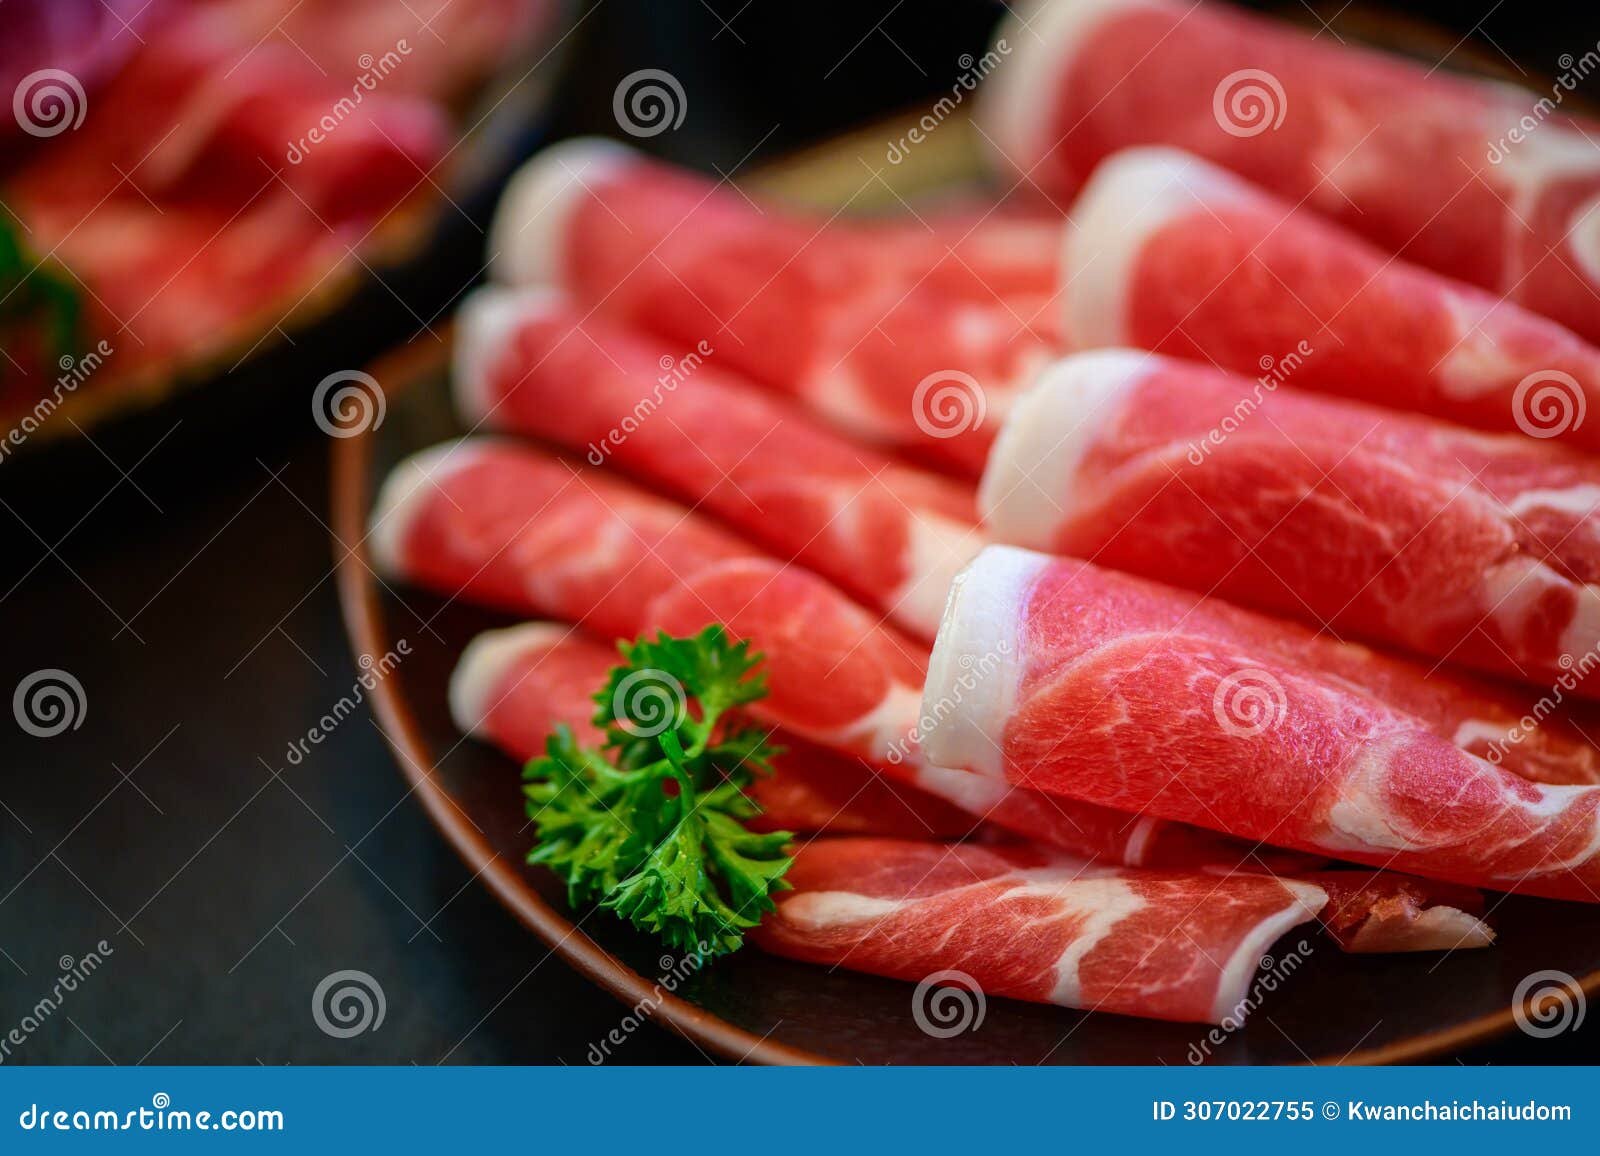 sliced topside wagyu beef for yakiniku on plate on black background, premium japanese meat